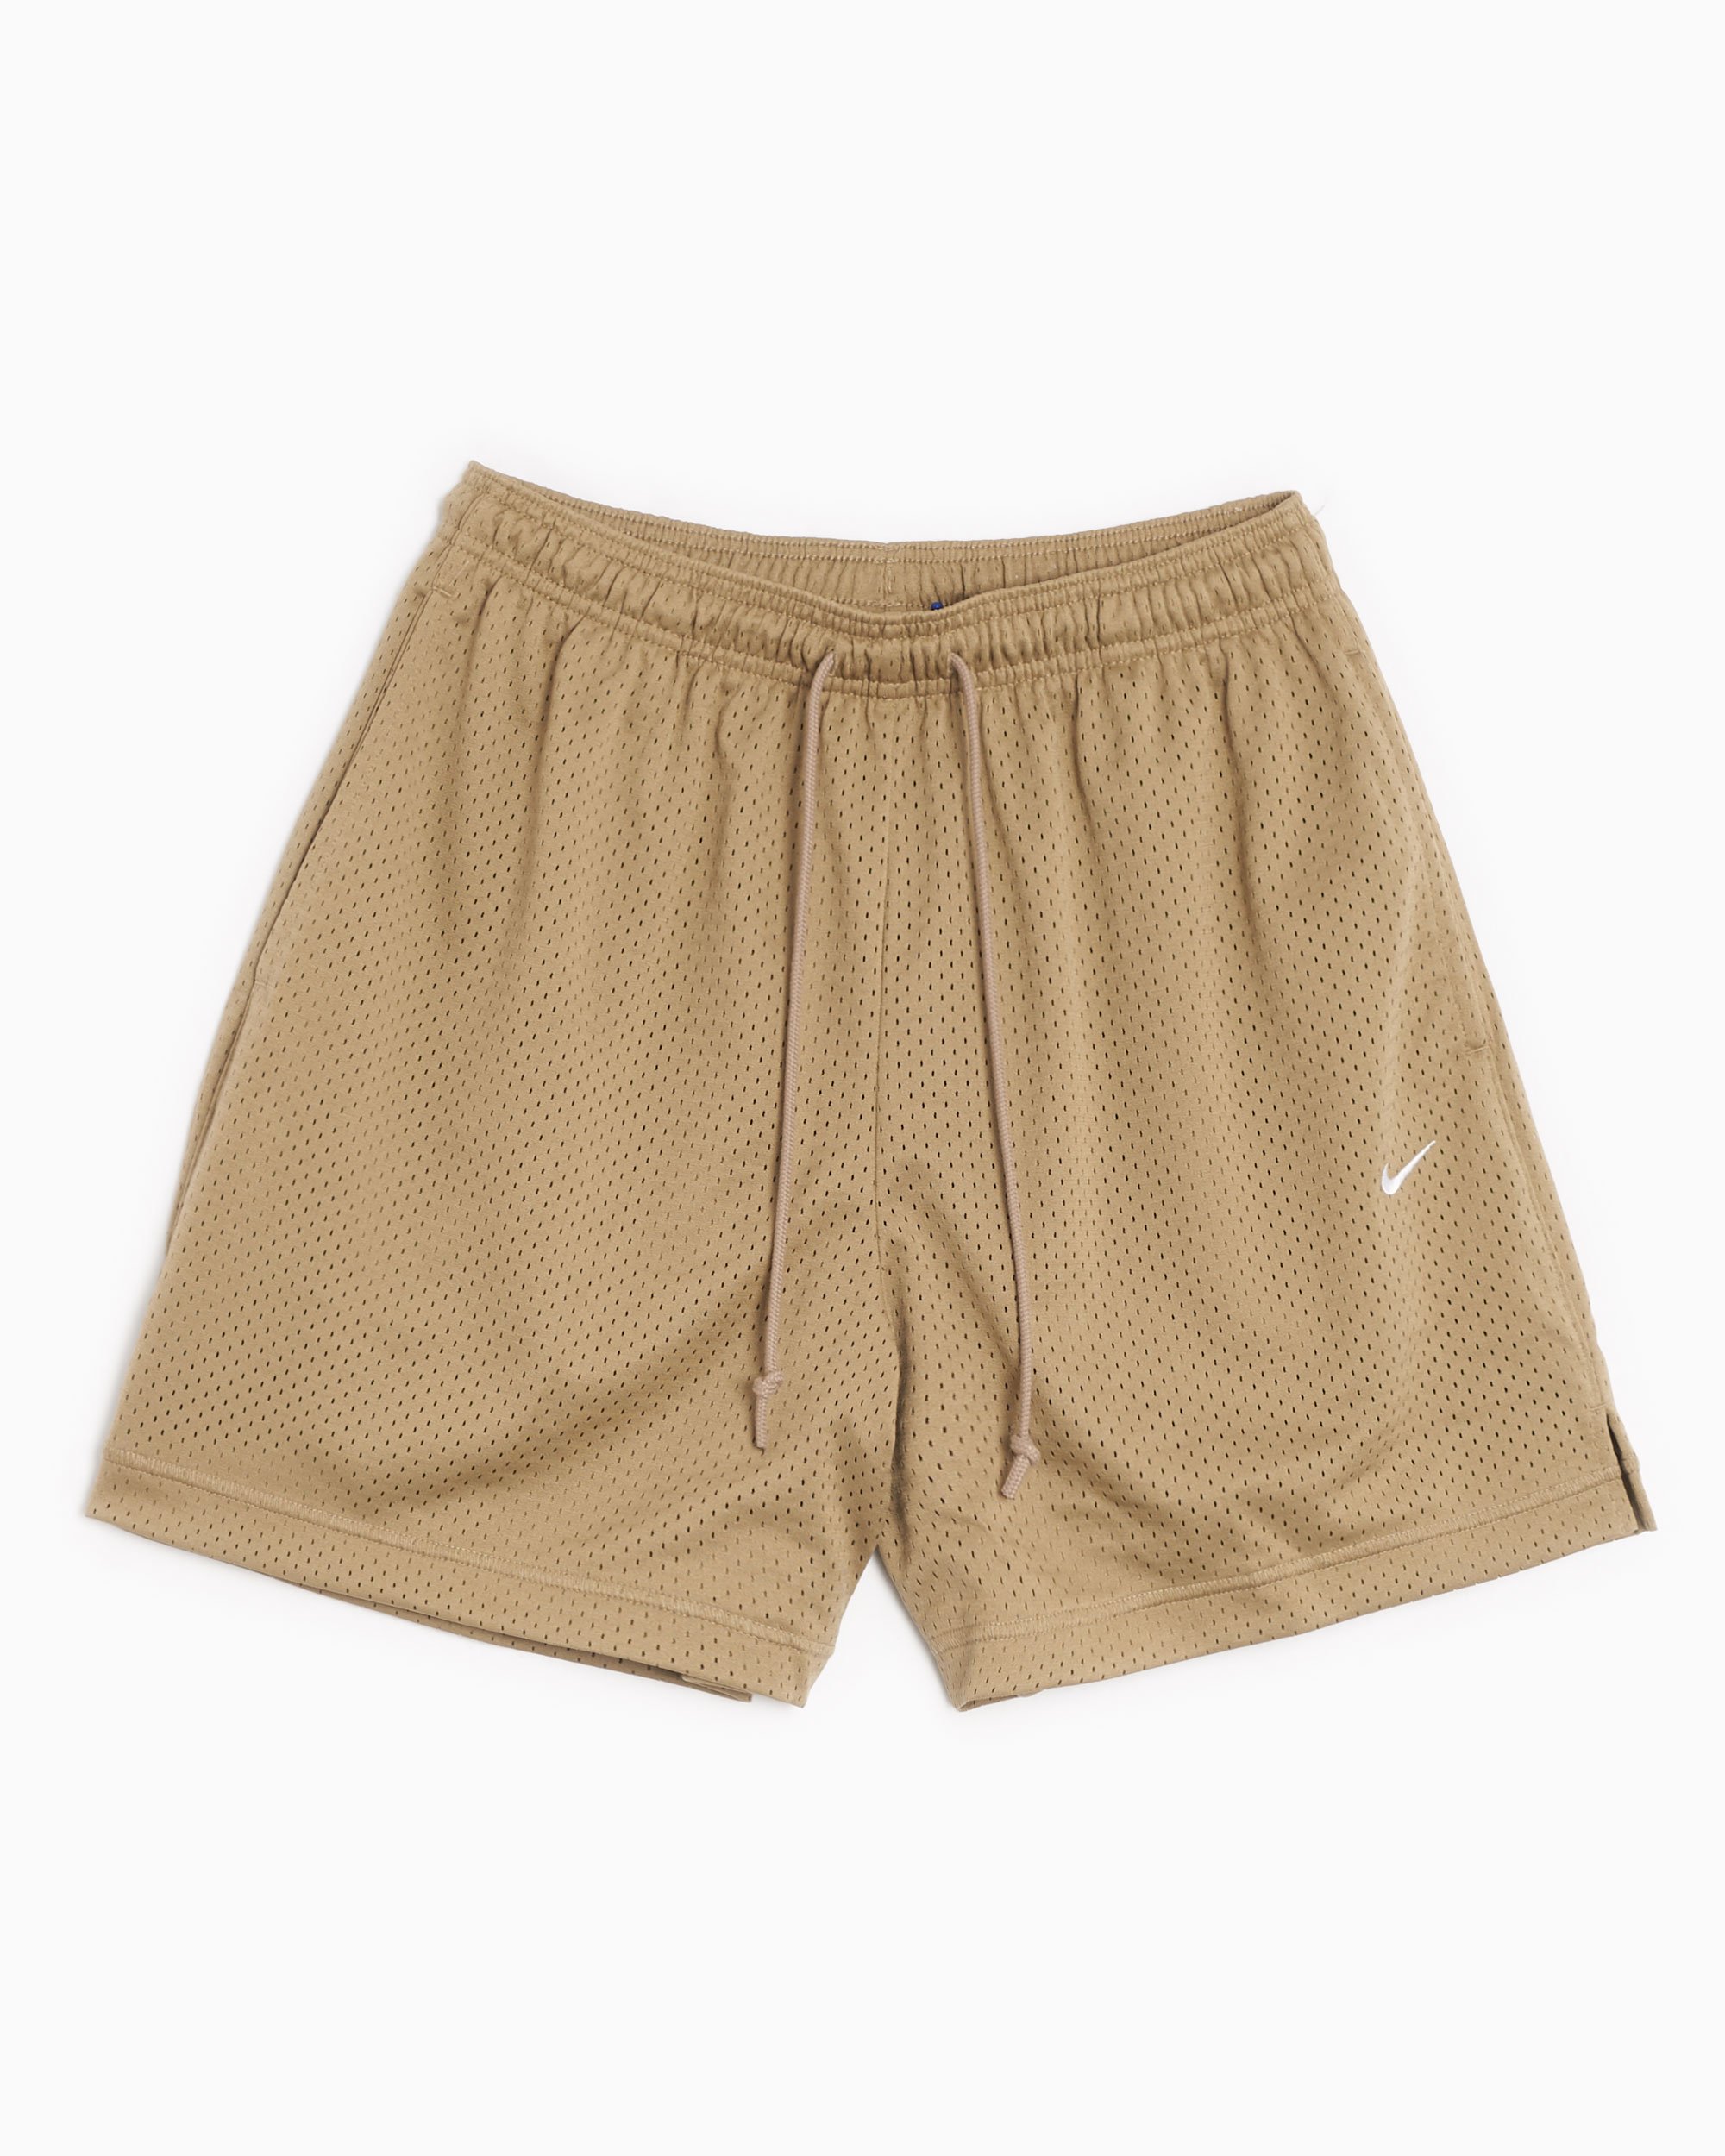 Nike Sportswear Authentics Men's Mesh Shorts Beige DQ4999-247| Buy ...